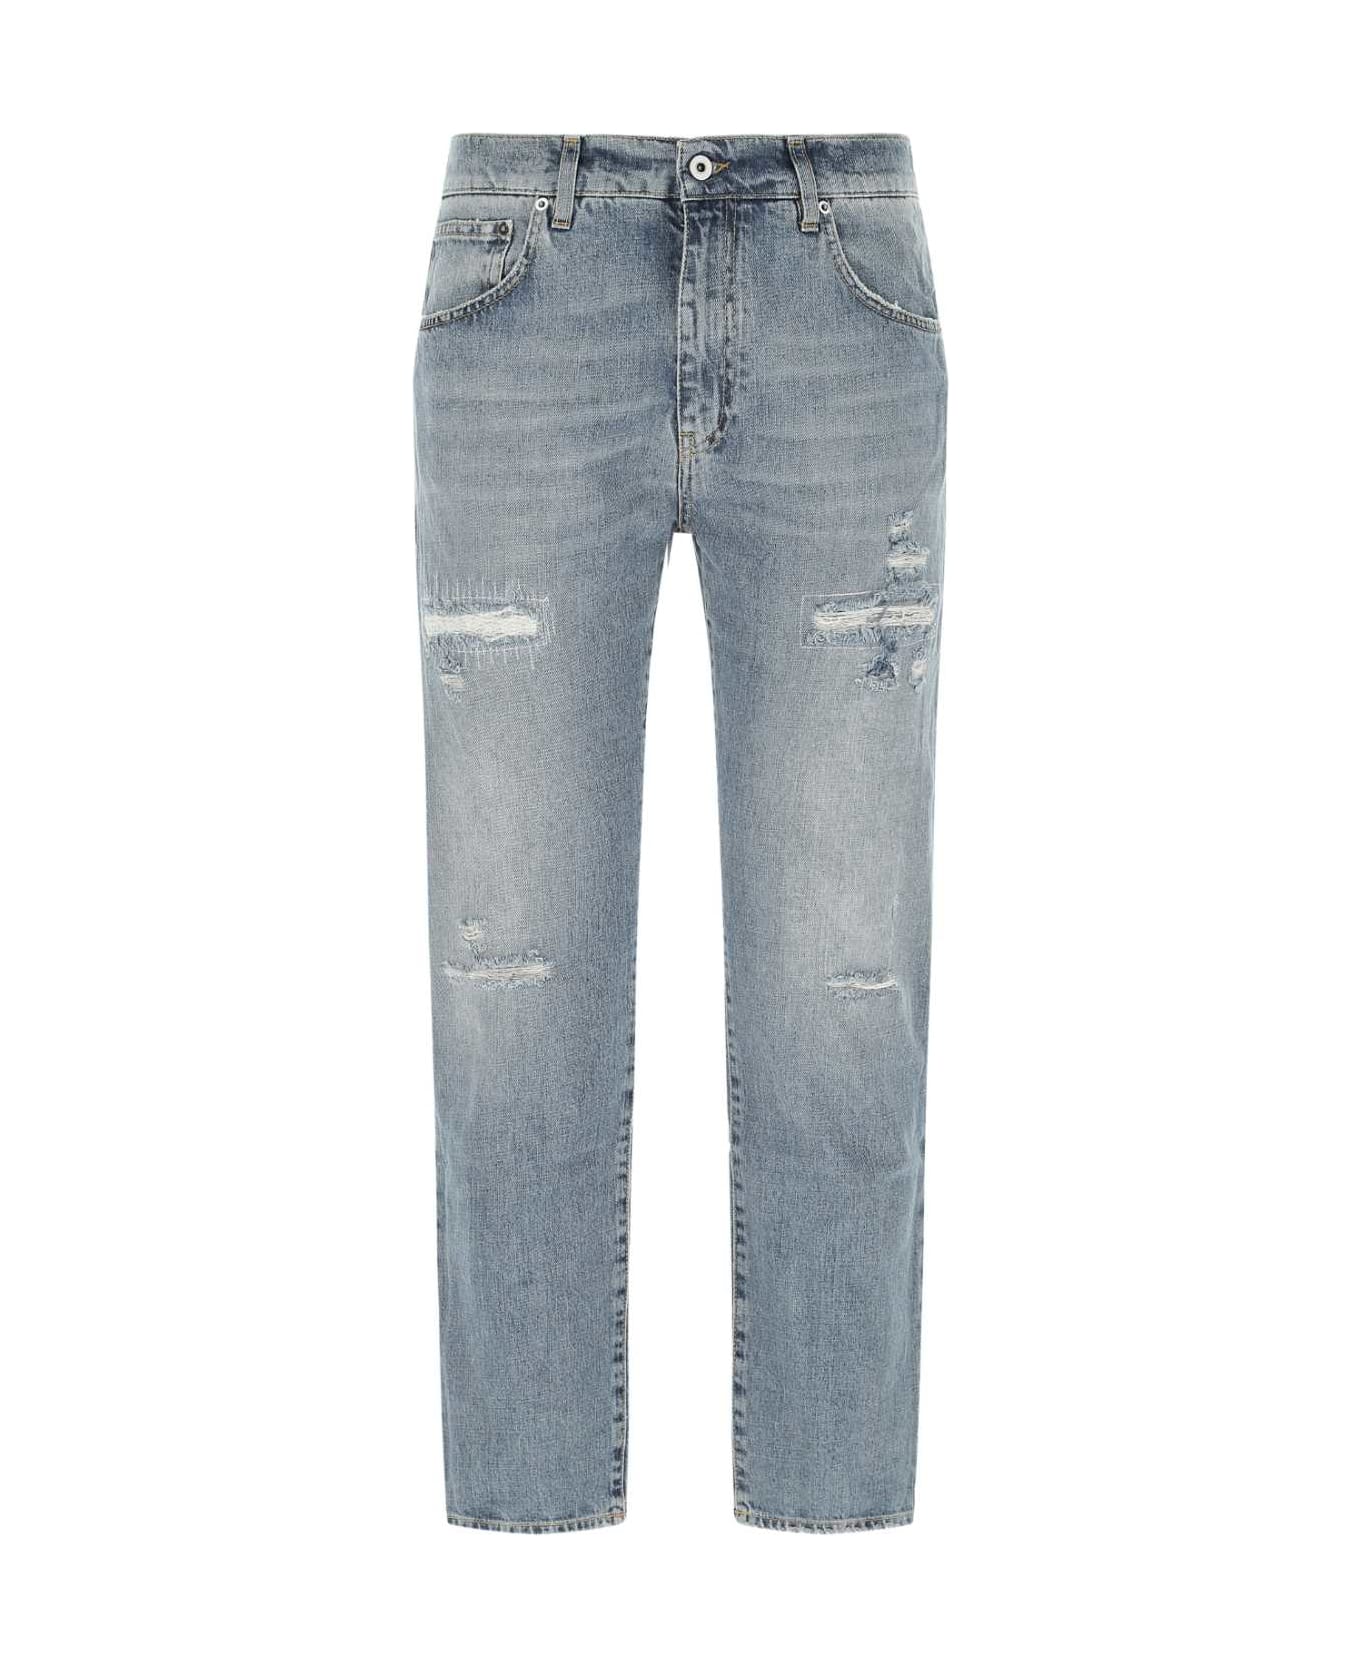 14 Bros Denim Cheswick Jeans - 9079